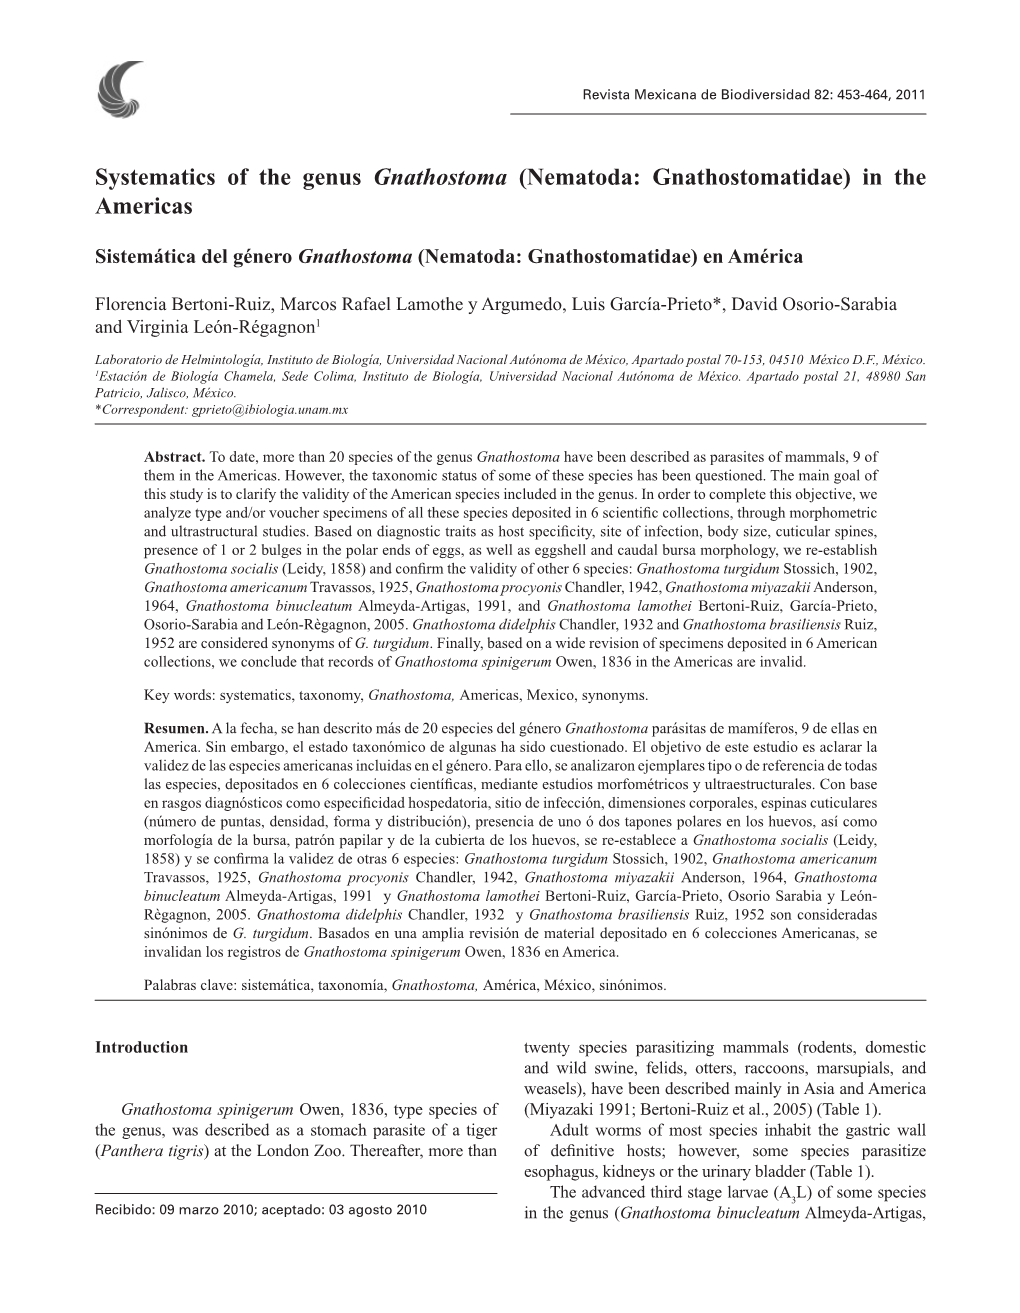 Systematics of the Genus Gnathostoma (Nematoda: Gnathostomatidae) in the Americas